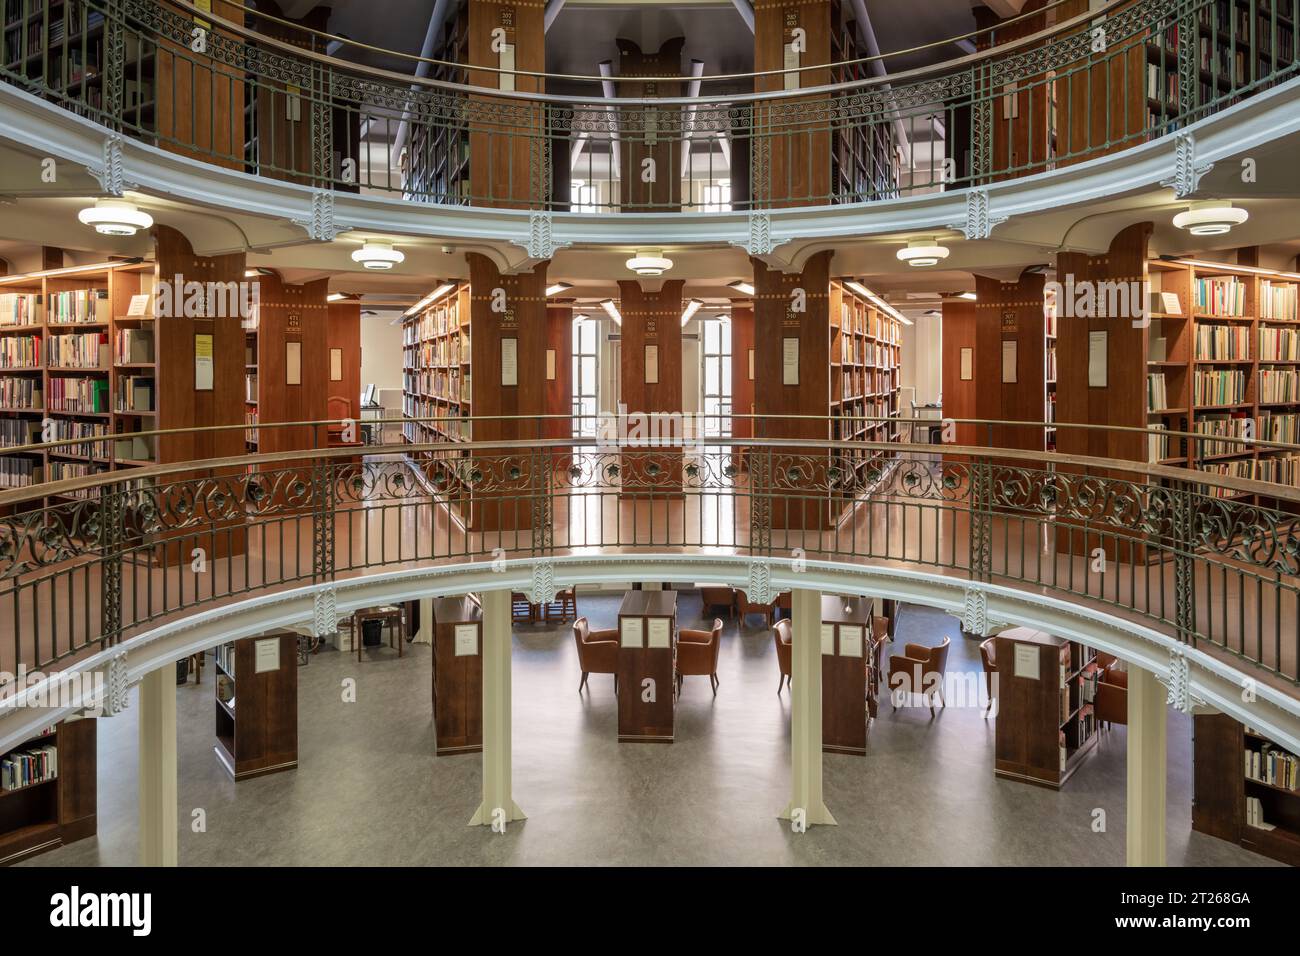 Salle de rotonde, Bibliothèque nationale Kansalliskirjasto, Helsinki, Finlande Banque D'Images